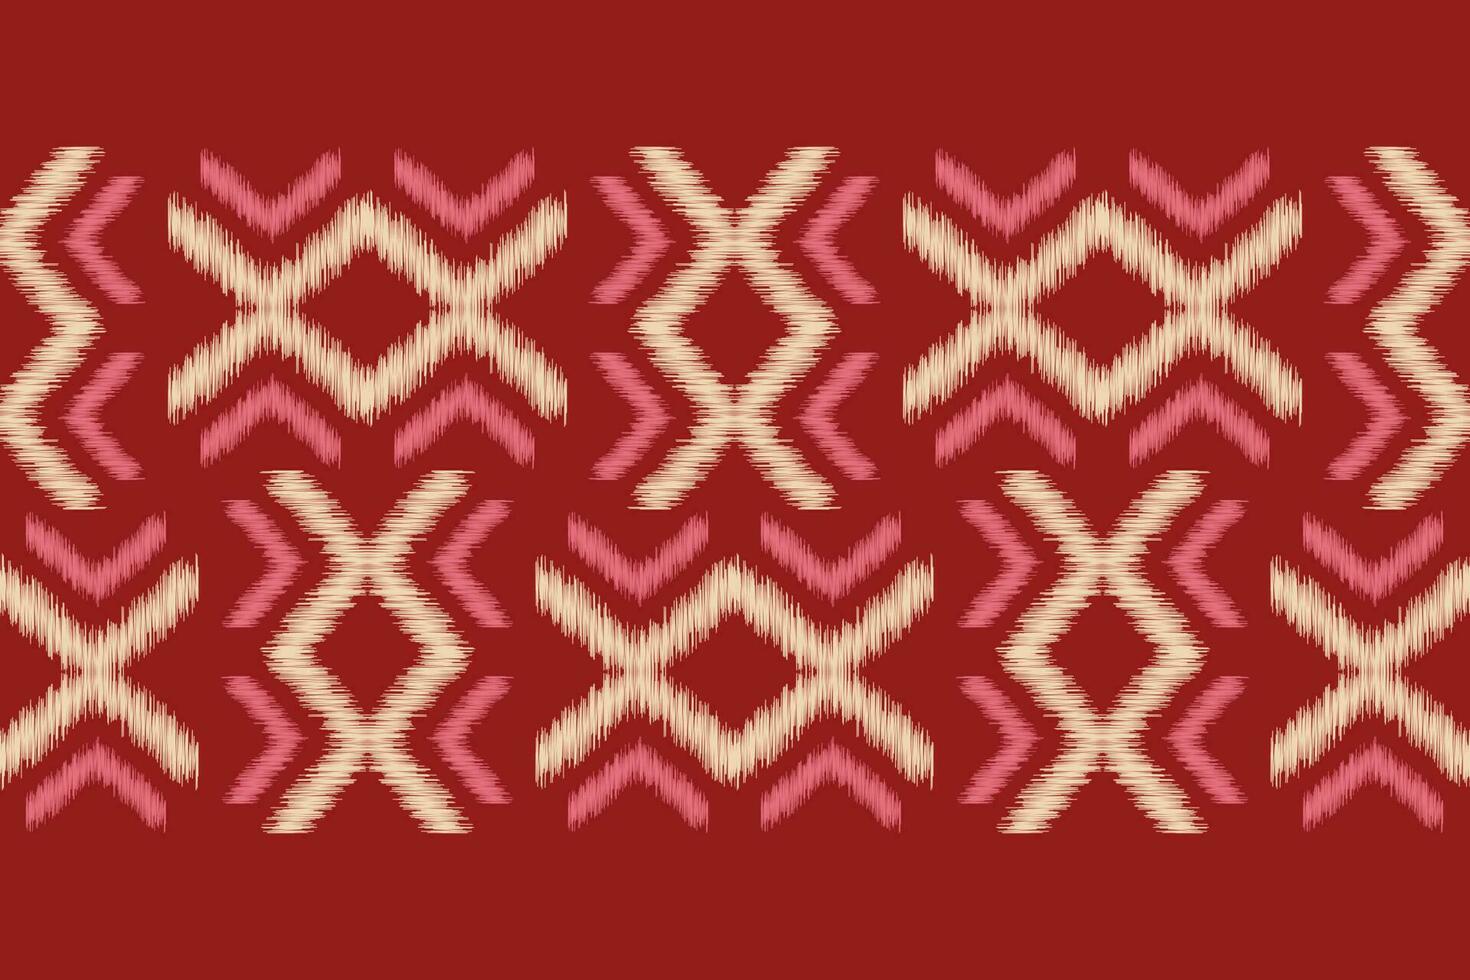 étnico ikat tecido padronizar geométrico estilo.africano ikat bordado étnico oriental padronizar motivos vermelho fundo. resumo,illustration.texture,vestuário,scraf,decoração,tapete,seda. vetor